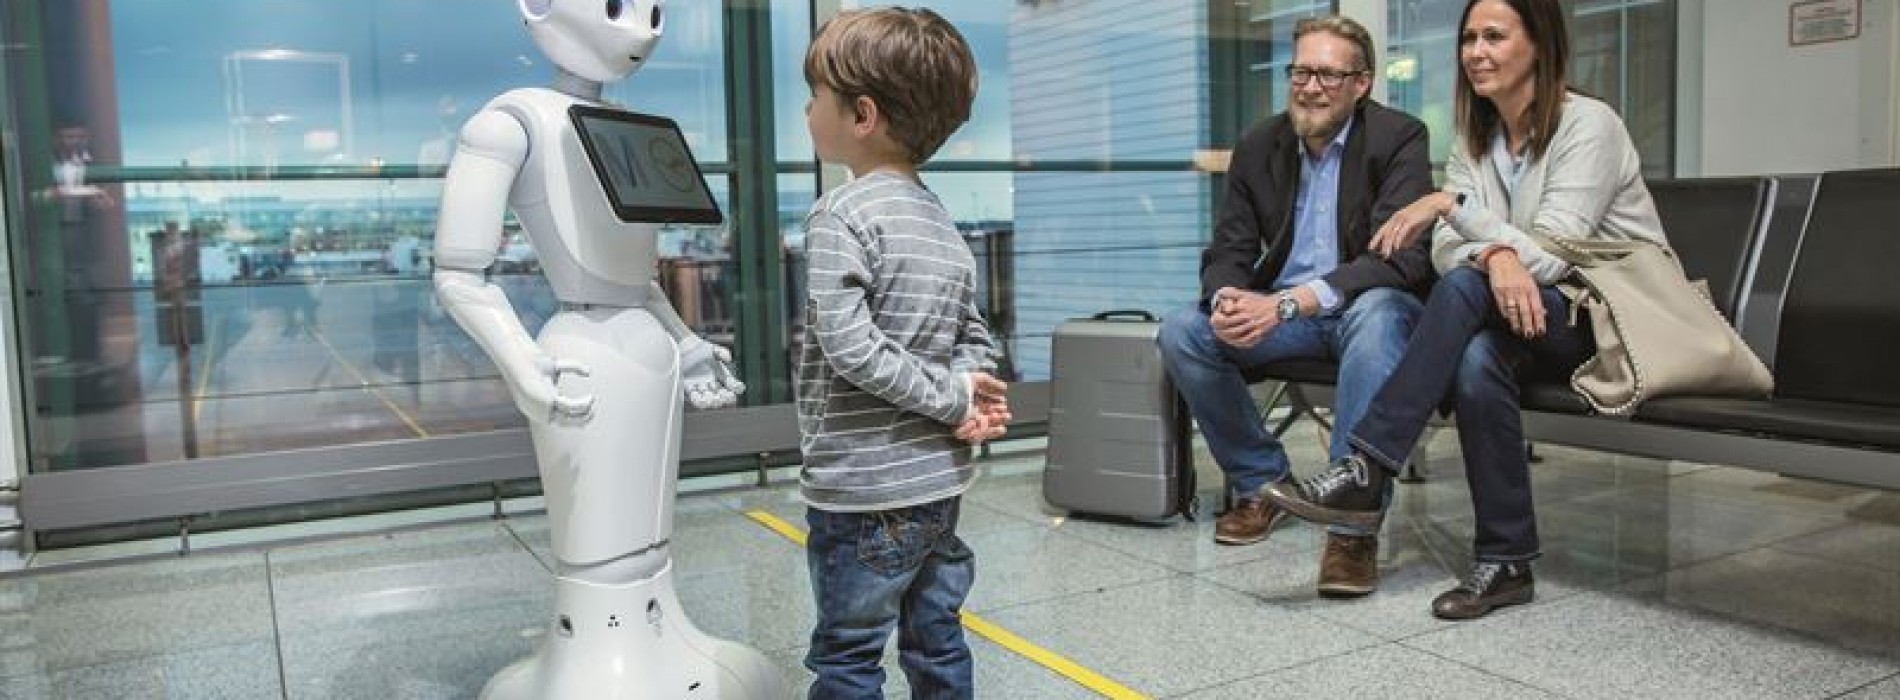 Munich Airport and Lufthansa start testing of humanoid robot in Terminal 2